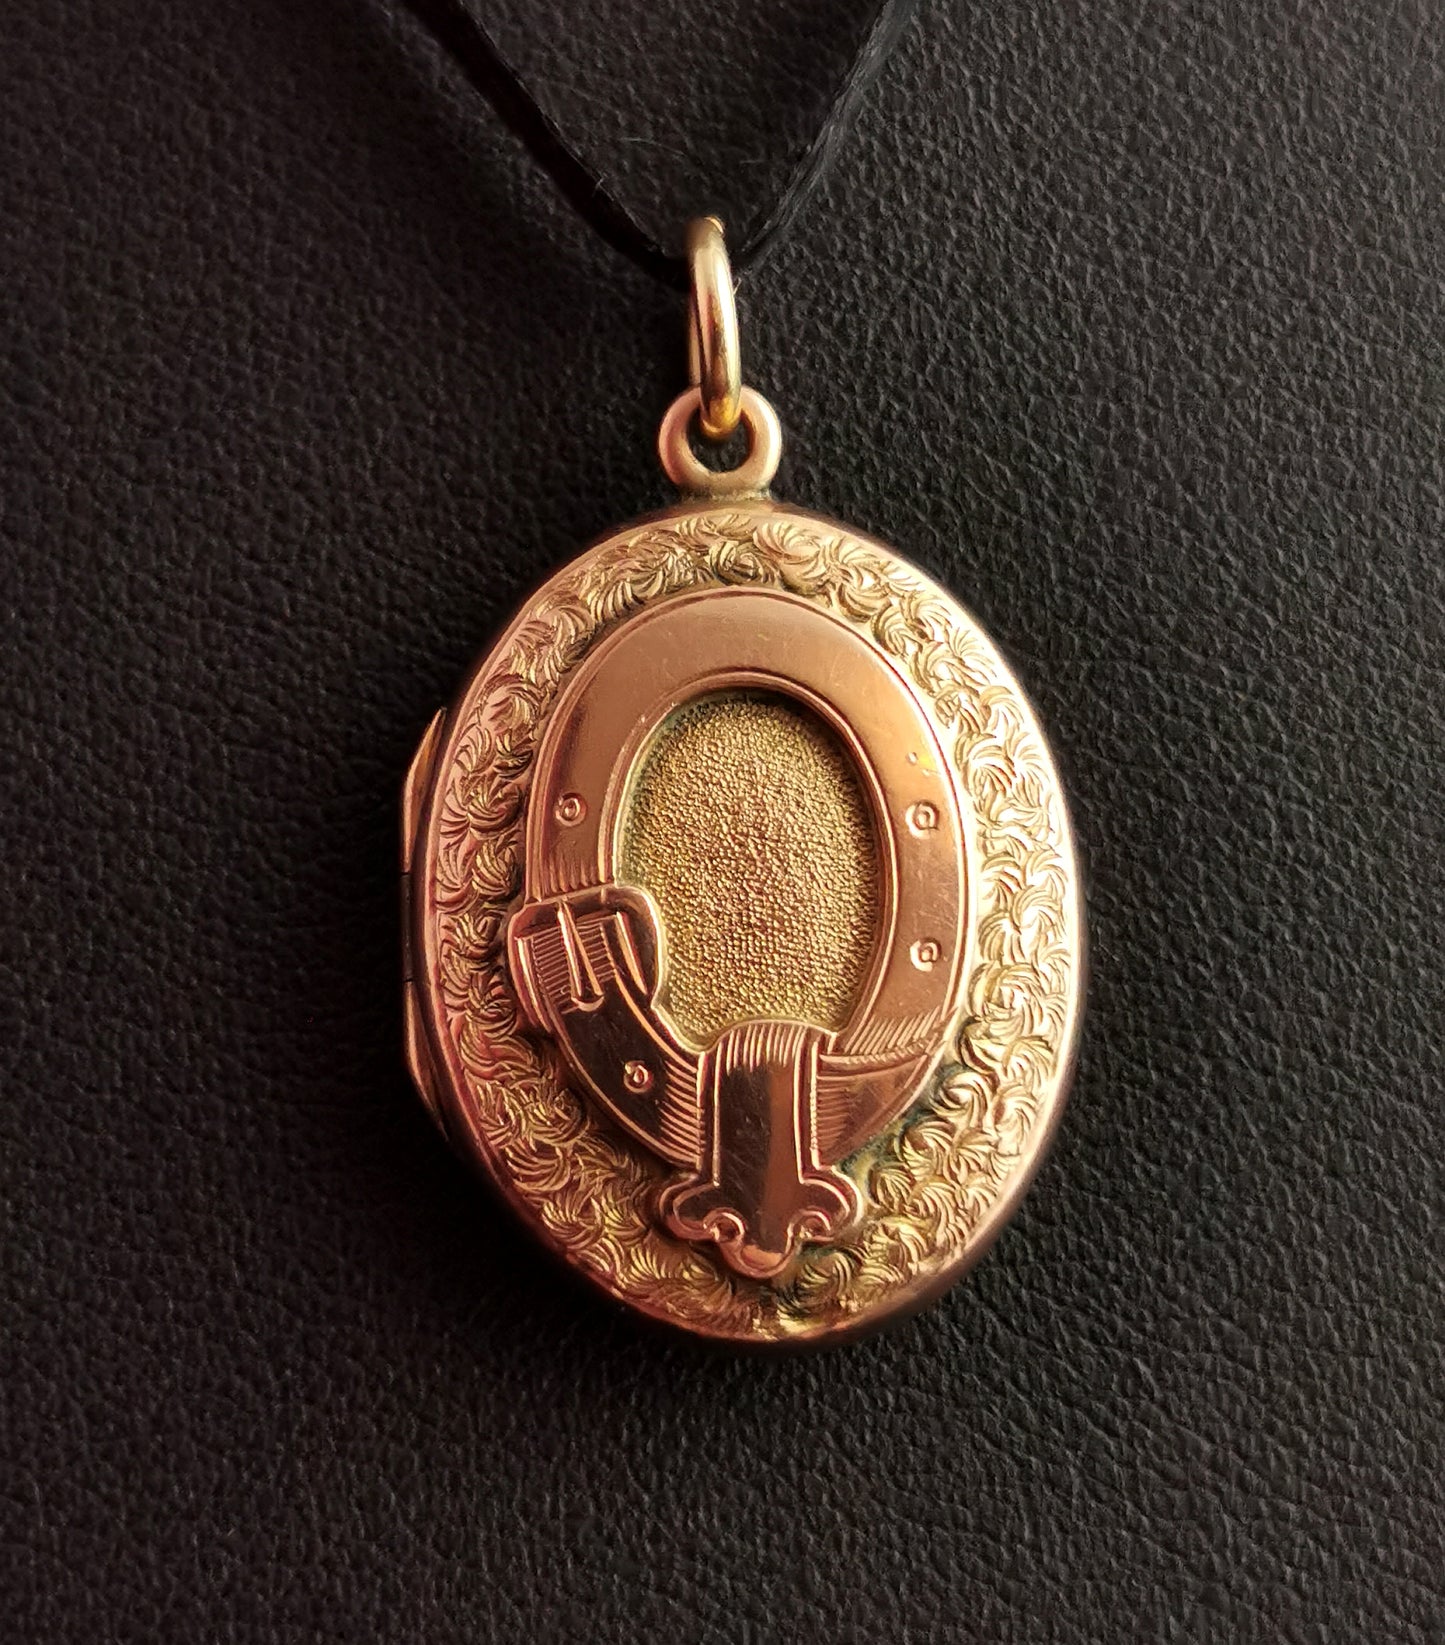 Antique 9ct gold buckle locket, Victorian, Order of the Garter